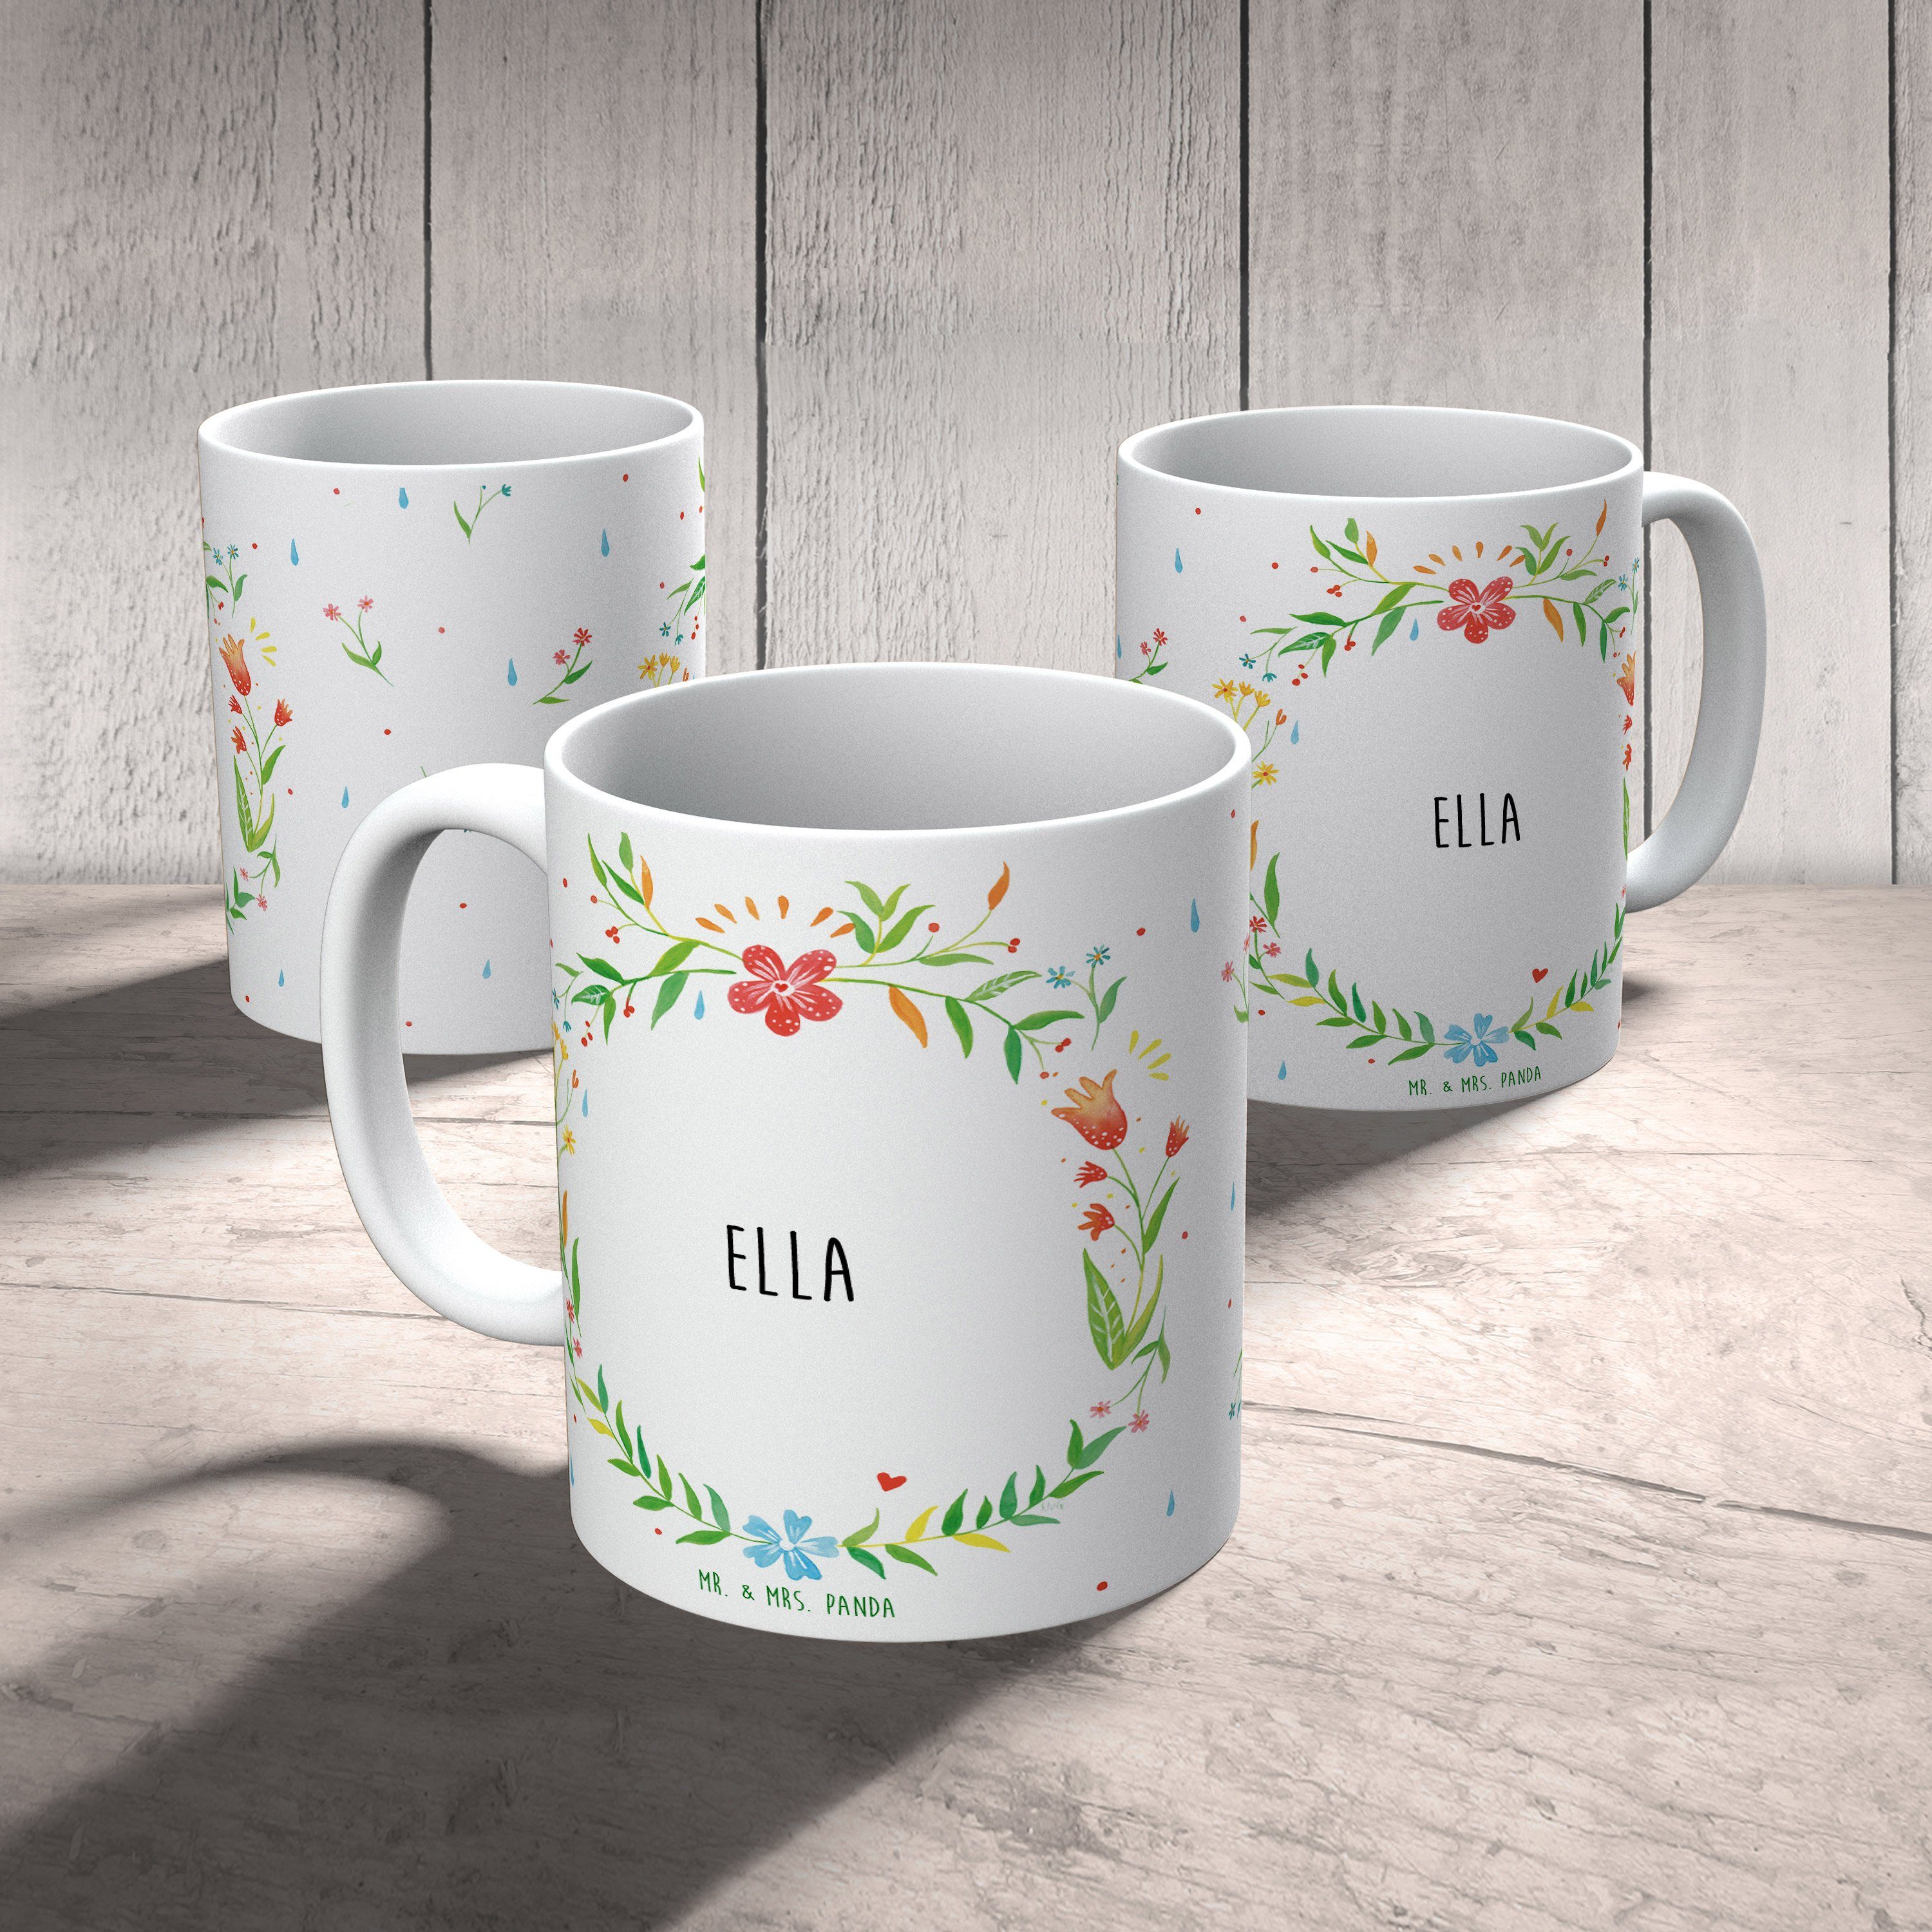 & Mrs. Panda Keramiktasse, Tasse Geschenk, - Ella Mr. Becher, Keramik Motive, Tasse, Tasse Geschenk